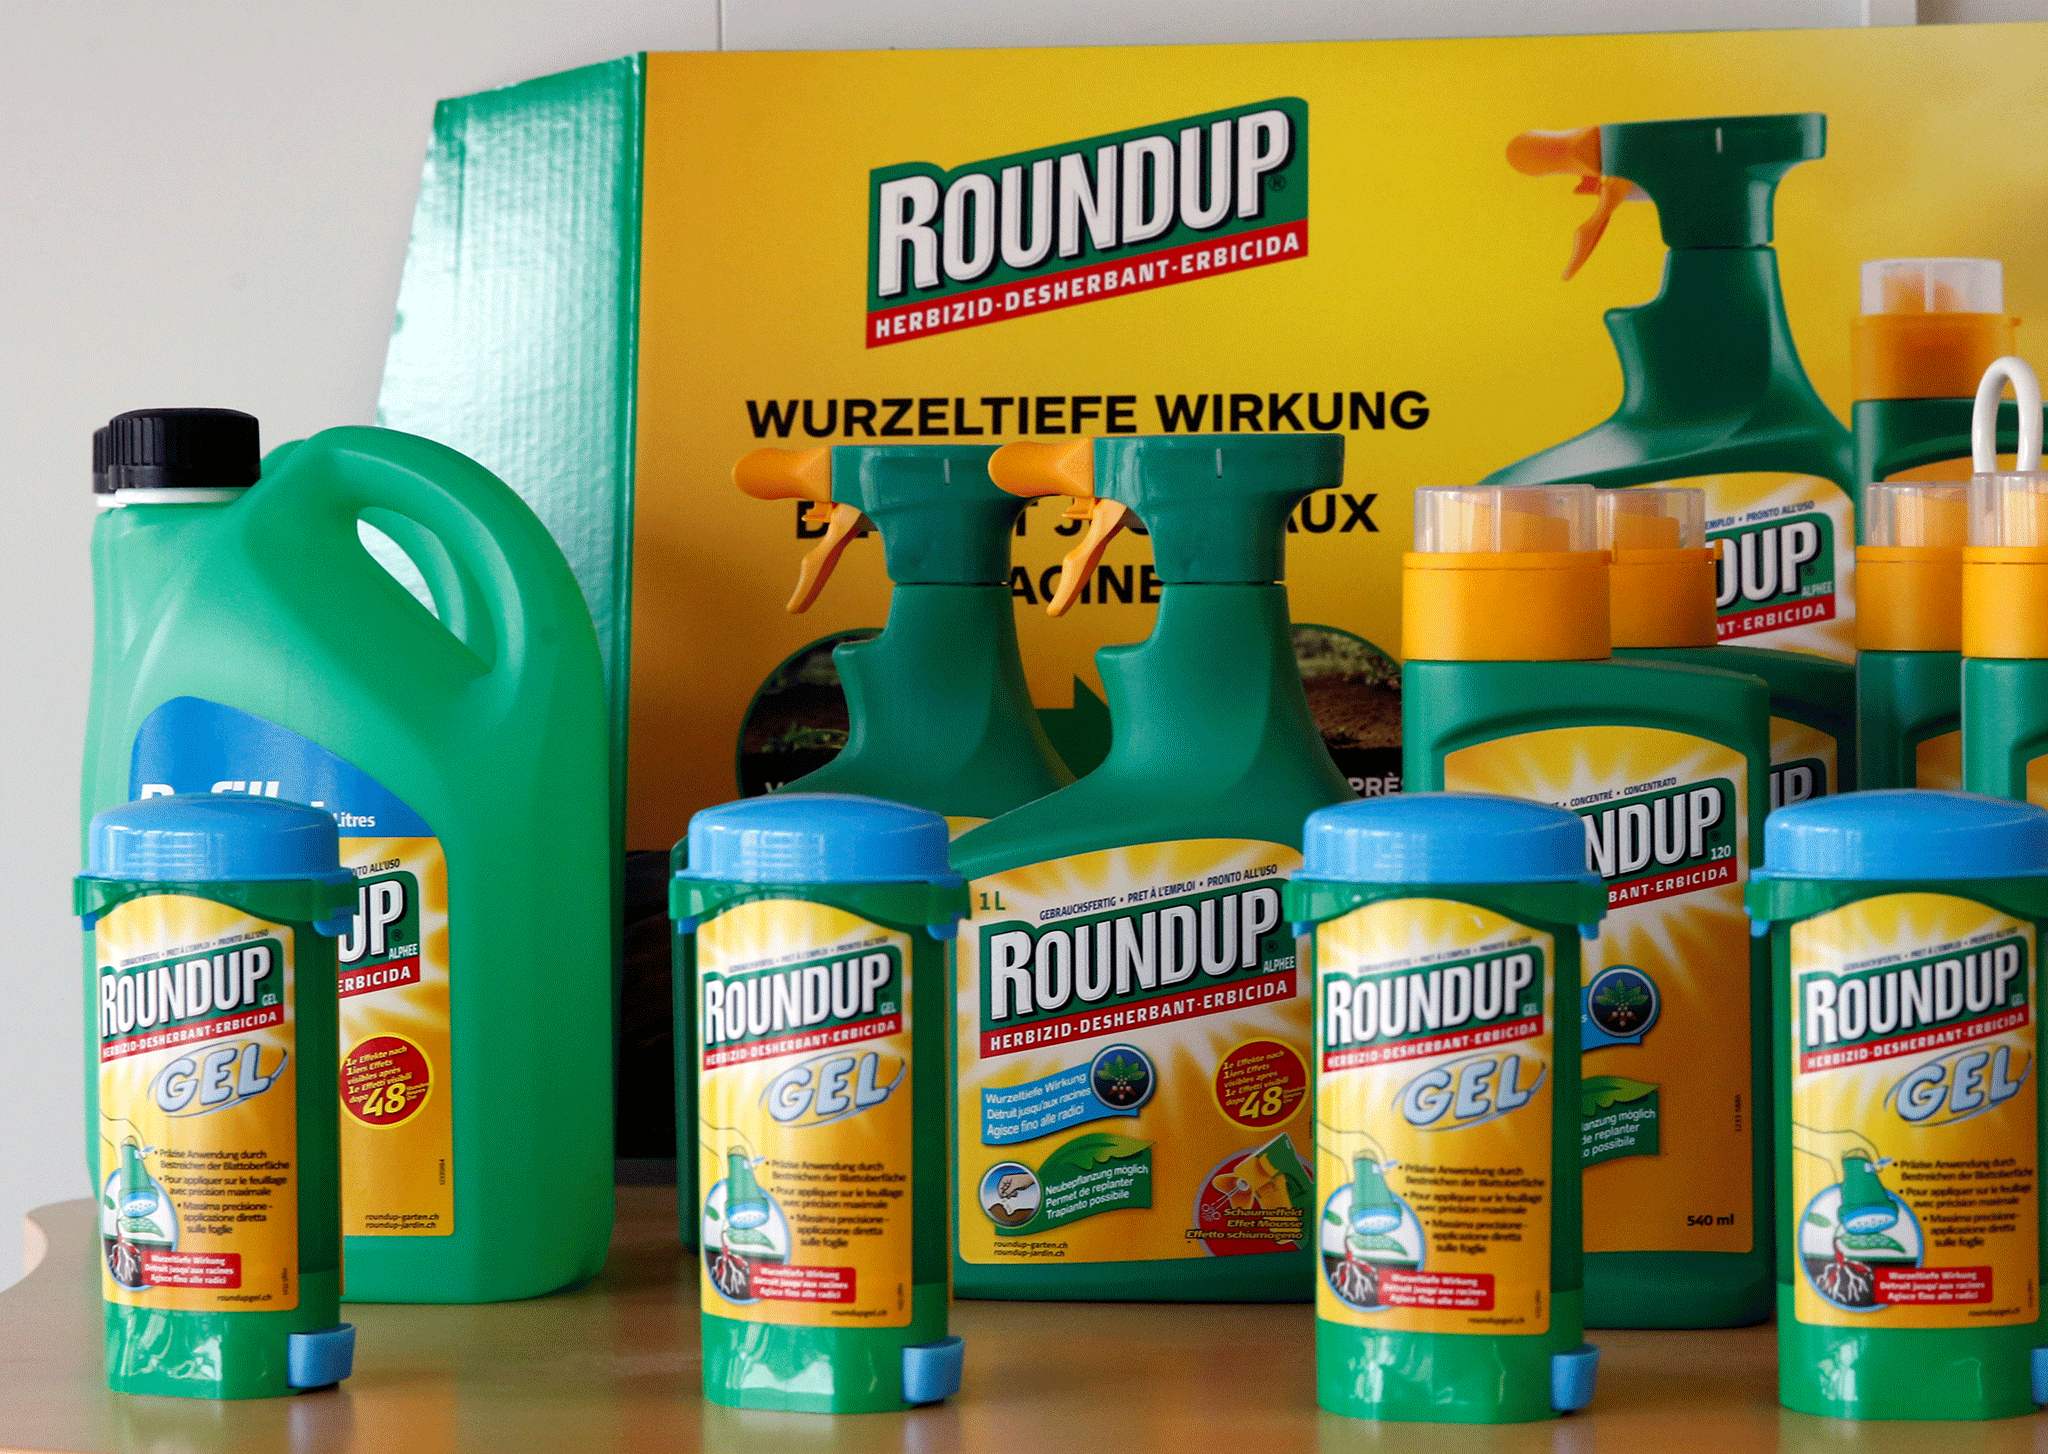 Monsanto's controversial Glyphosate pesticide, Roundup